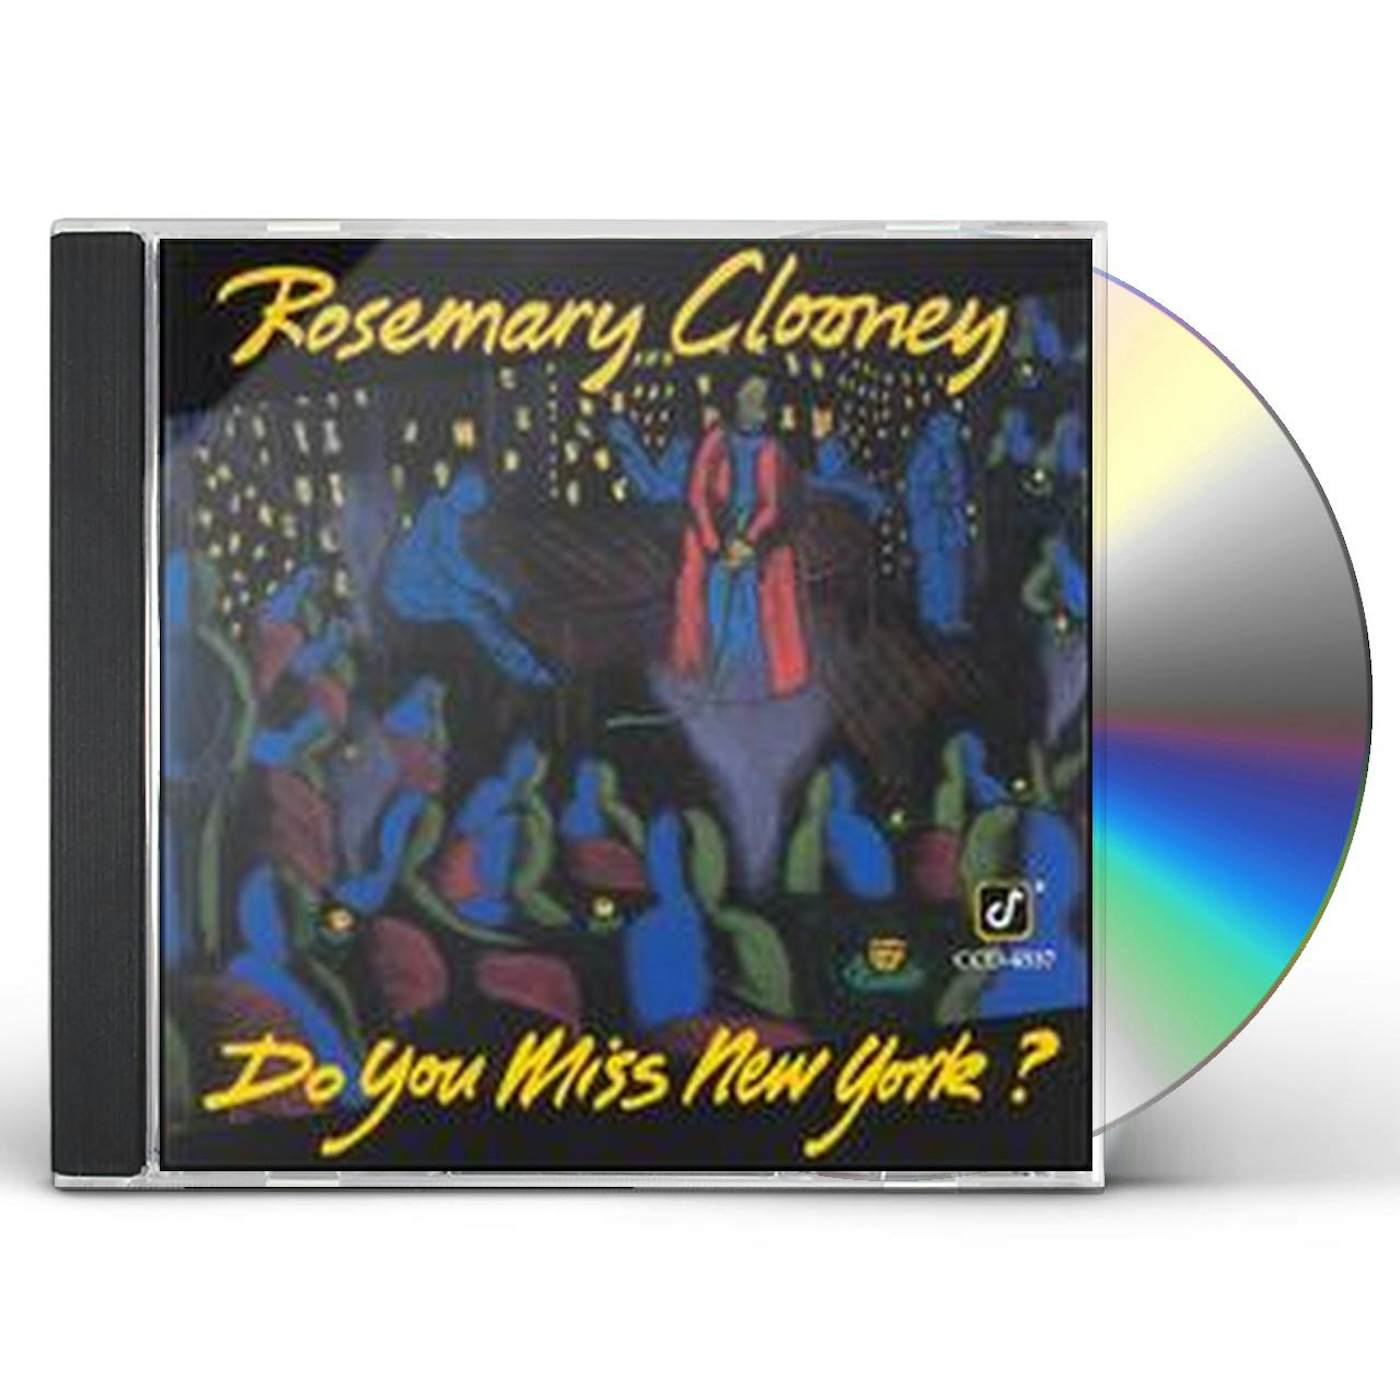 Rosemary Clooney DO YOU MISS NEW YORK CD